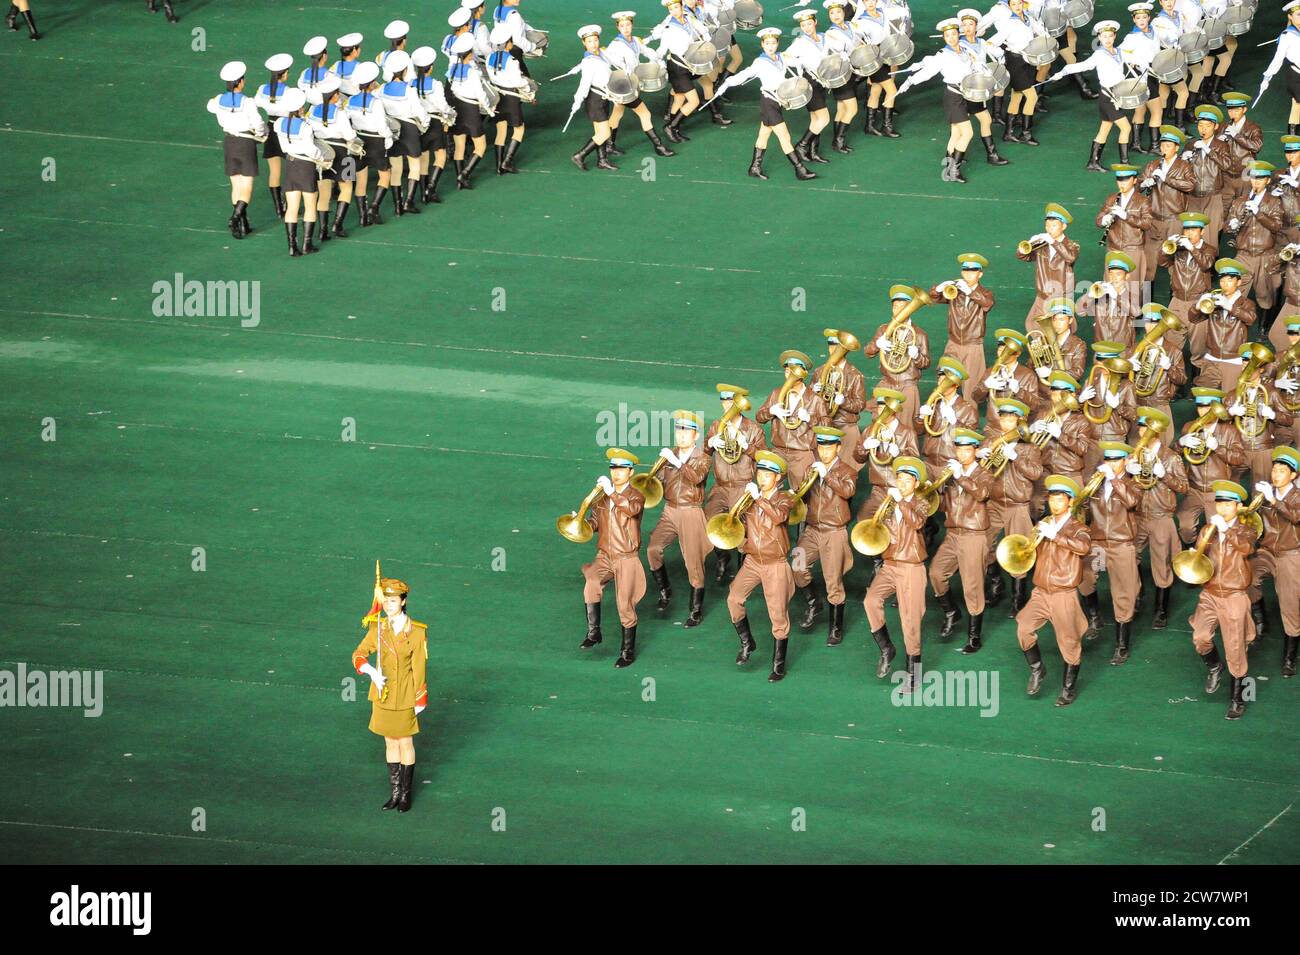 08.08.2012, Pyongyang, North Korea - Military band plays brass band music during the mass choreography and Artistic Performance at Arirang Festival. Stock Photo